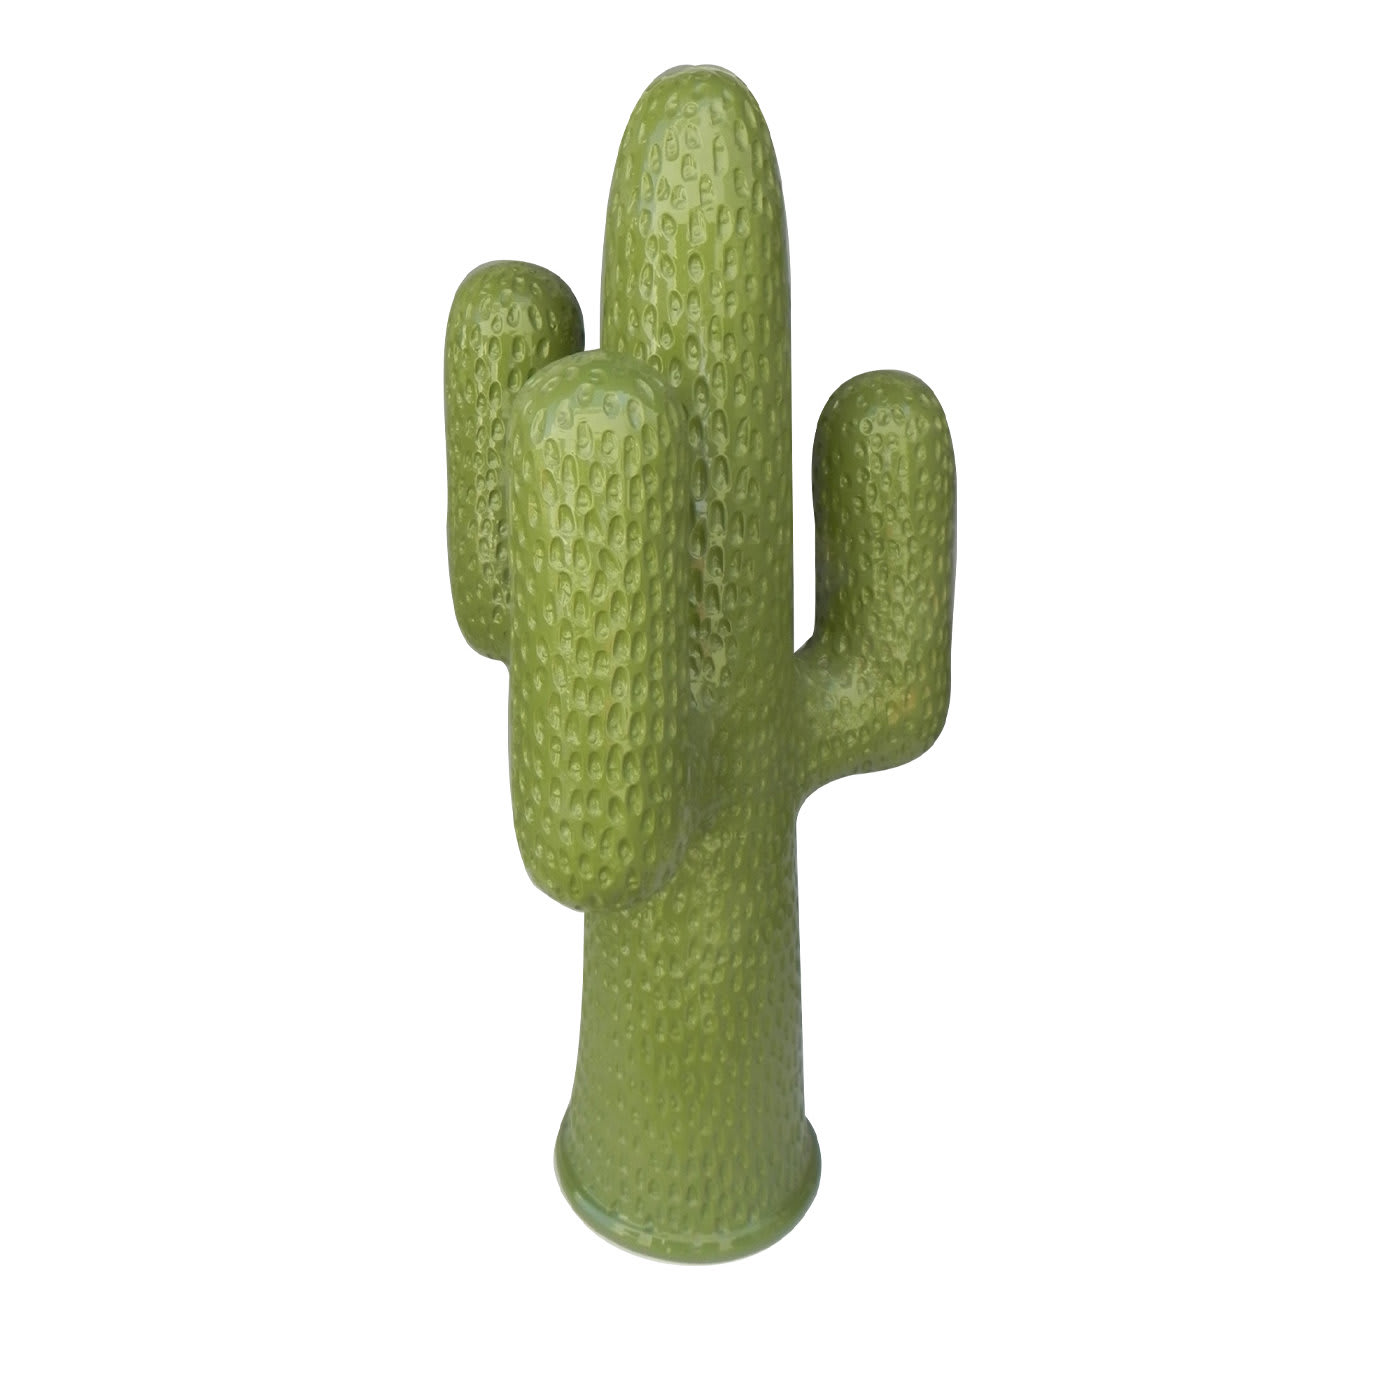 Texas City Ceramic Cactus Sculpture by Tullio Mazzotti - Mazzotti 1903